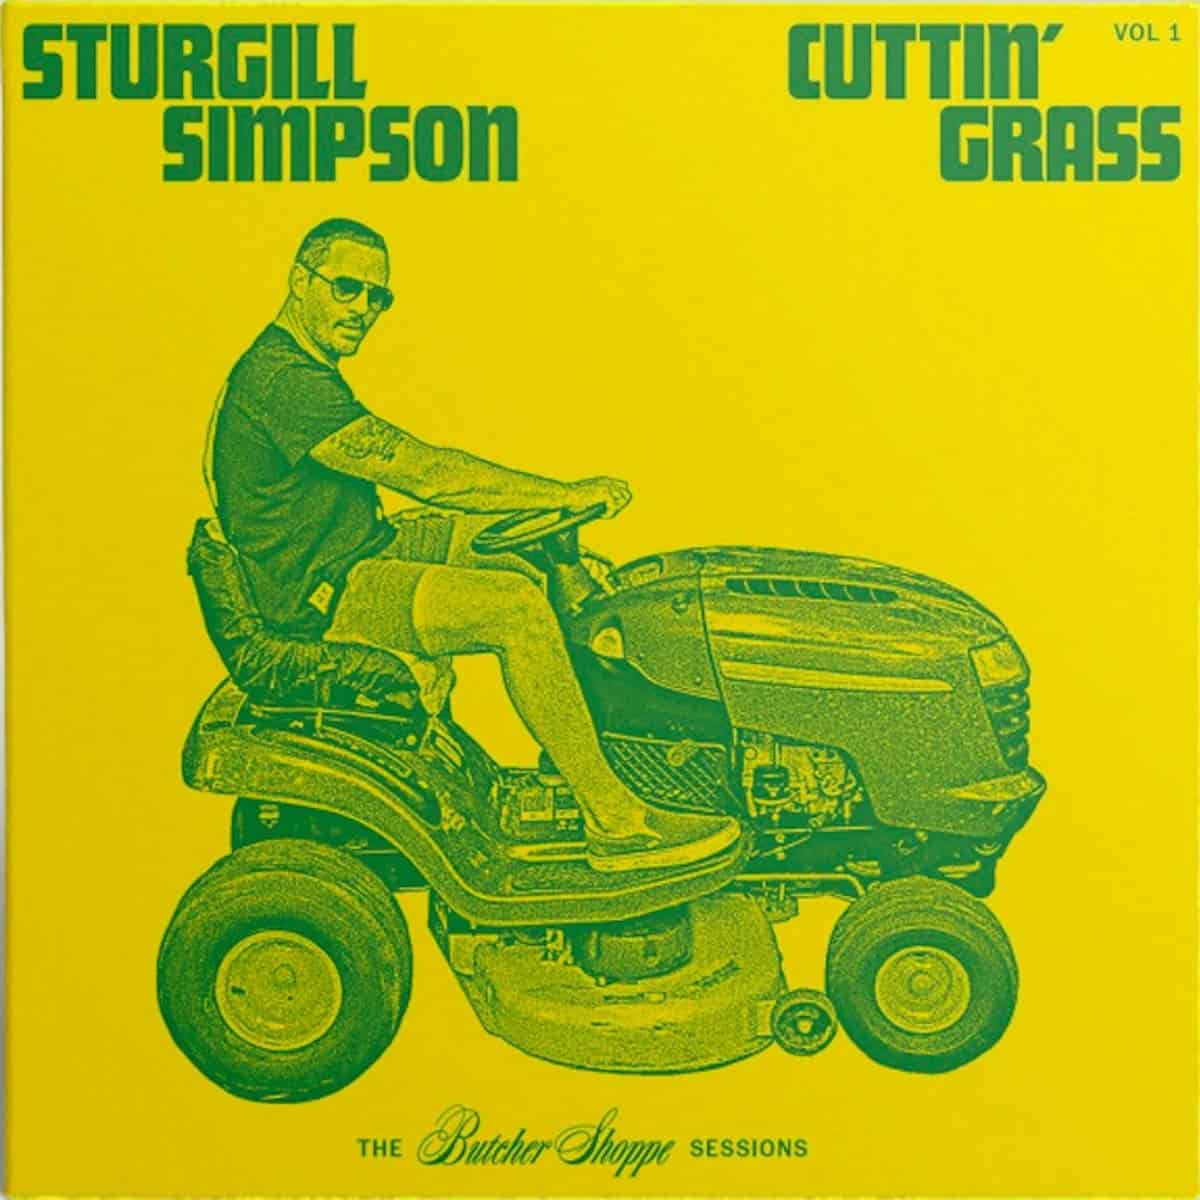 Sturgill-Simpson-Cuttin-Grass-Vol-1-vinyl-record-album-front